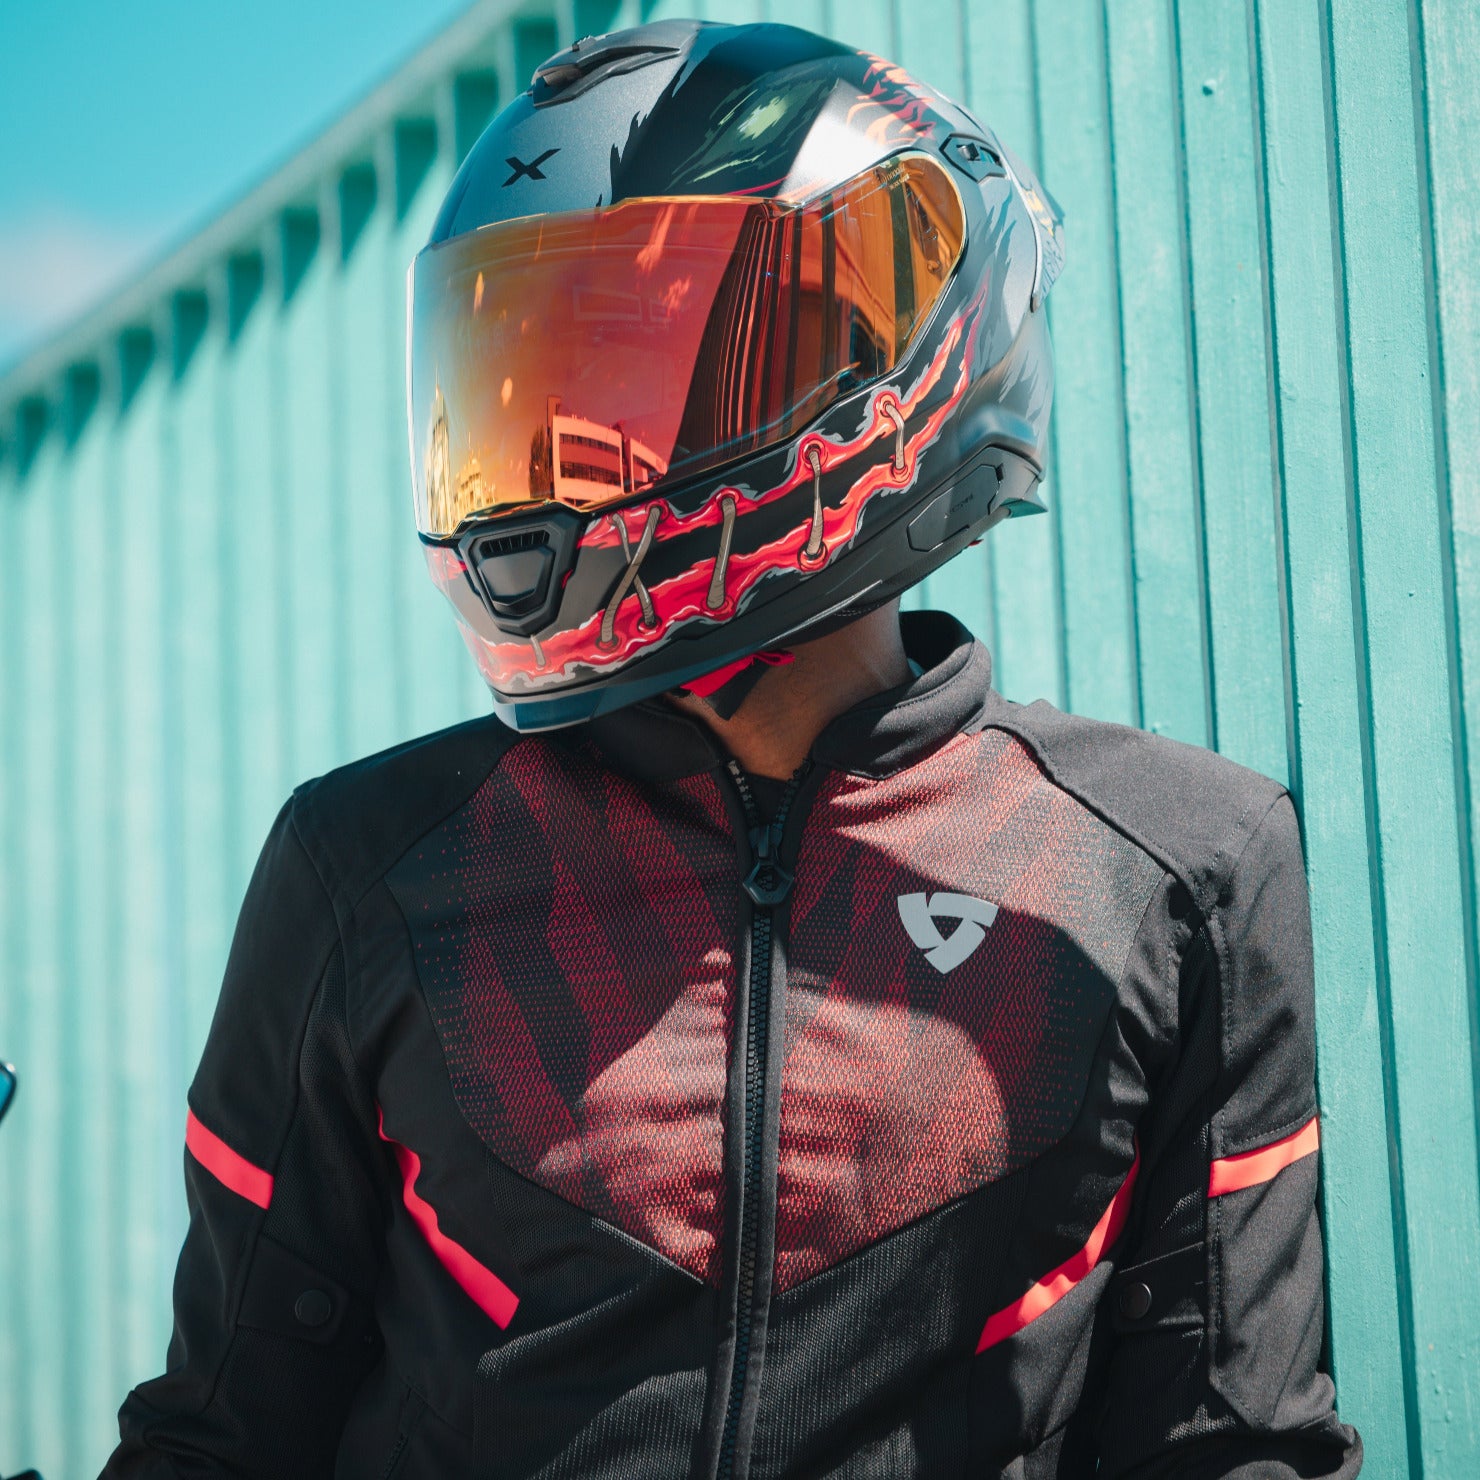 NEXX Y.100R Night Rider Helmet (2 Colors)